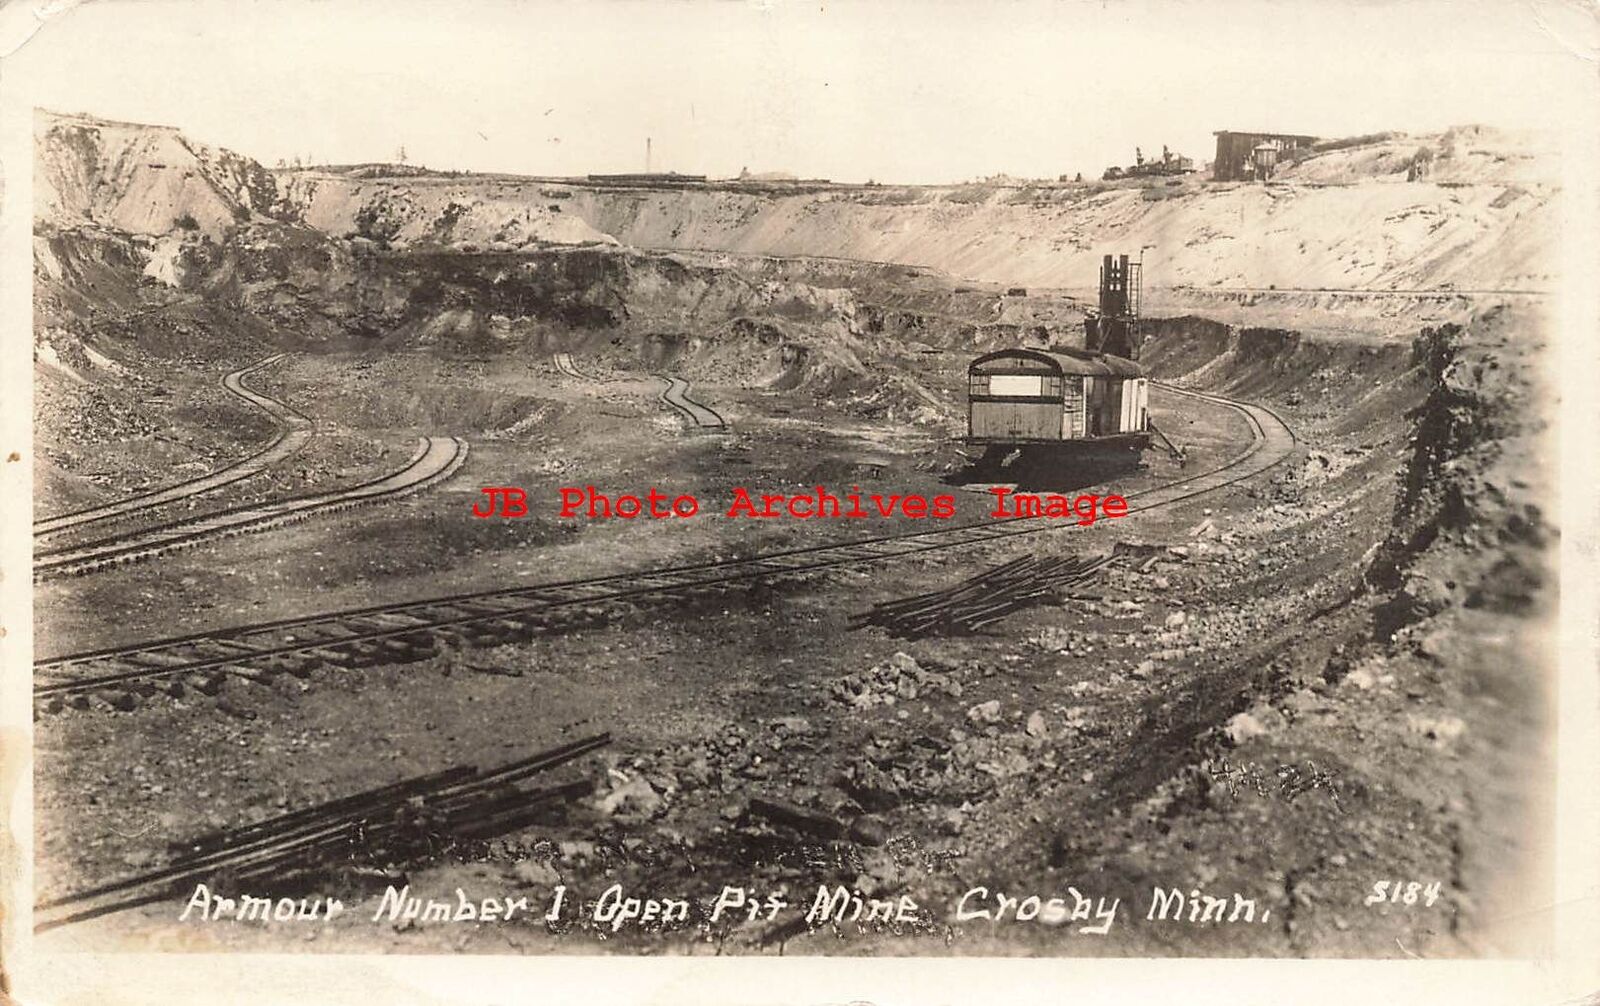 MN, Crosby, Minnesota, RPPC, Armour Number 1 Open Pit Mine, Mining